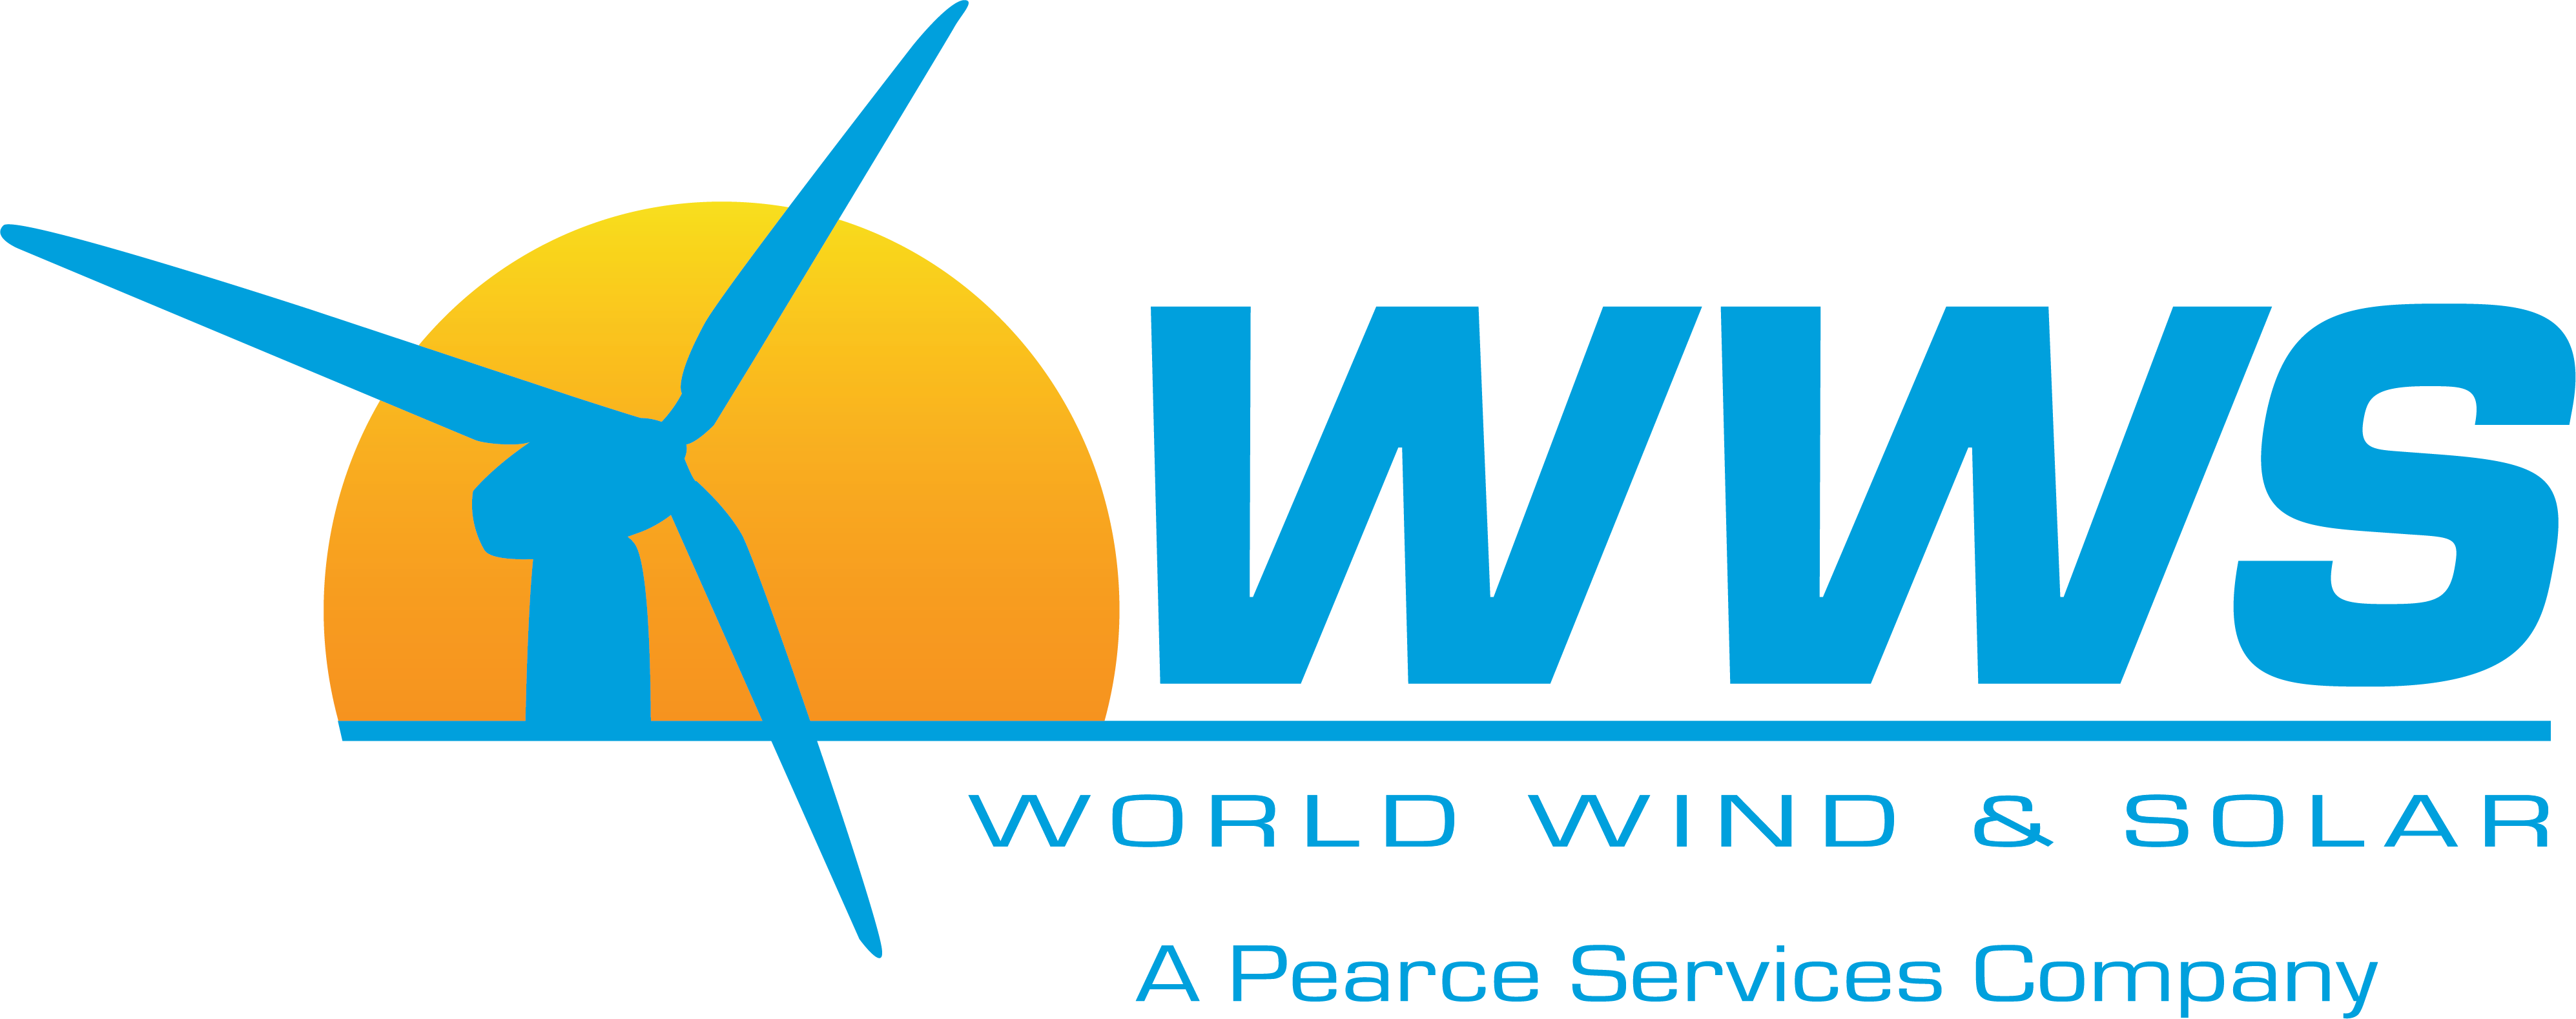 World Wind & Solar